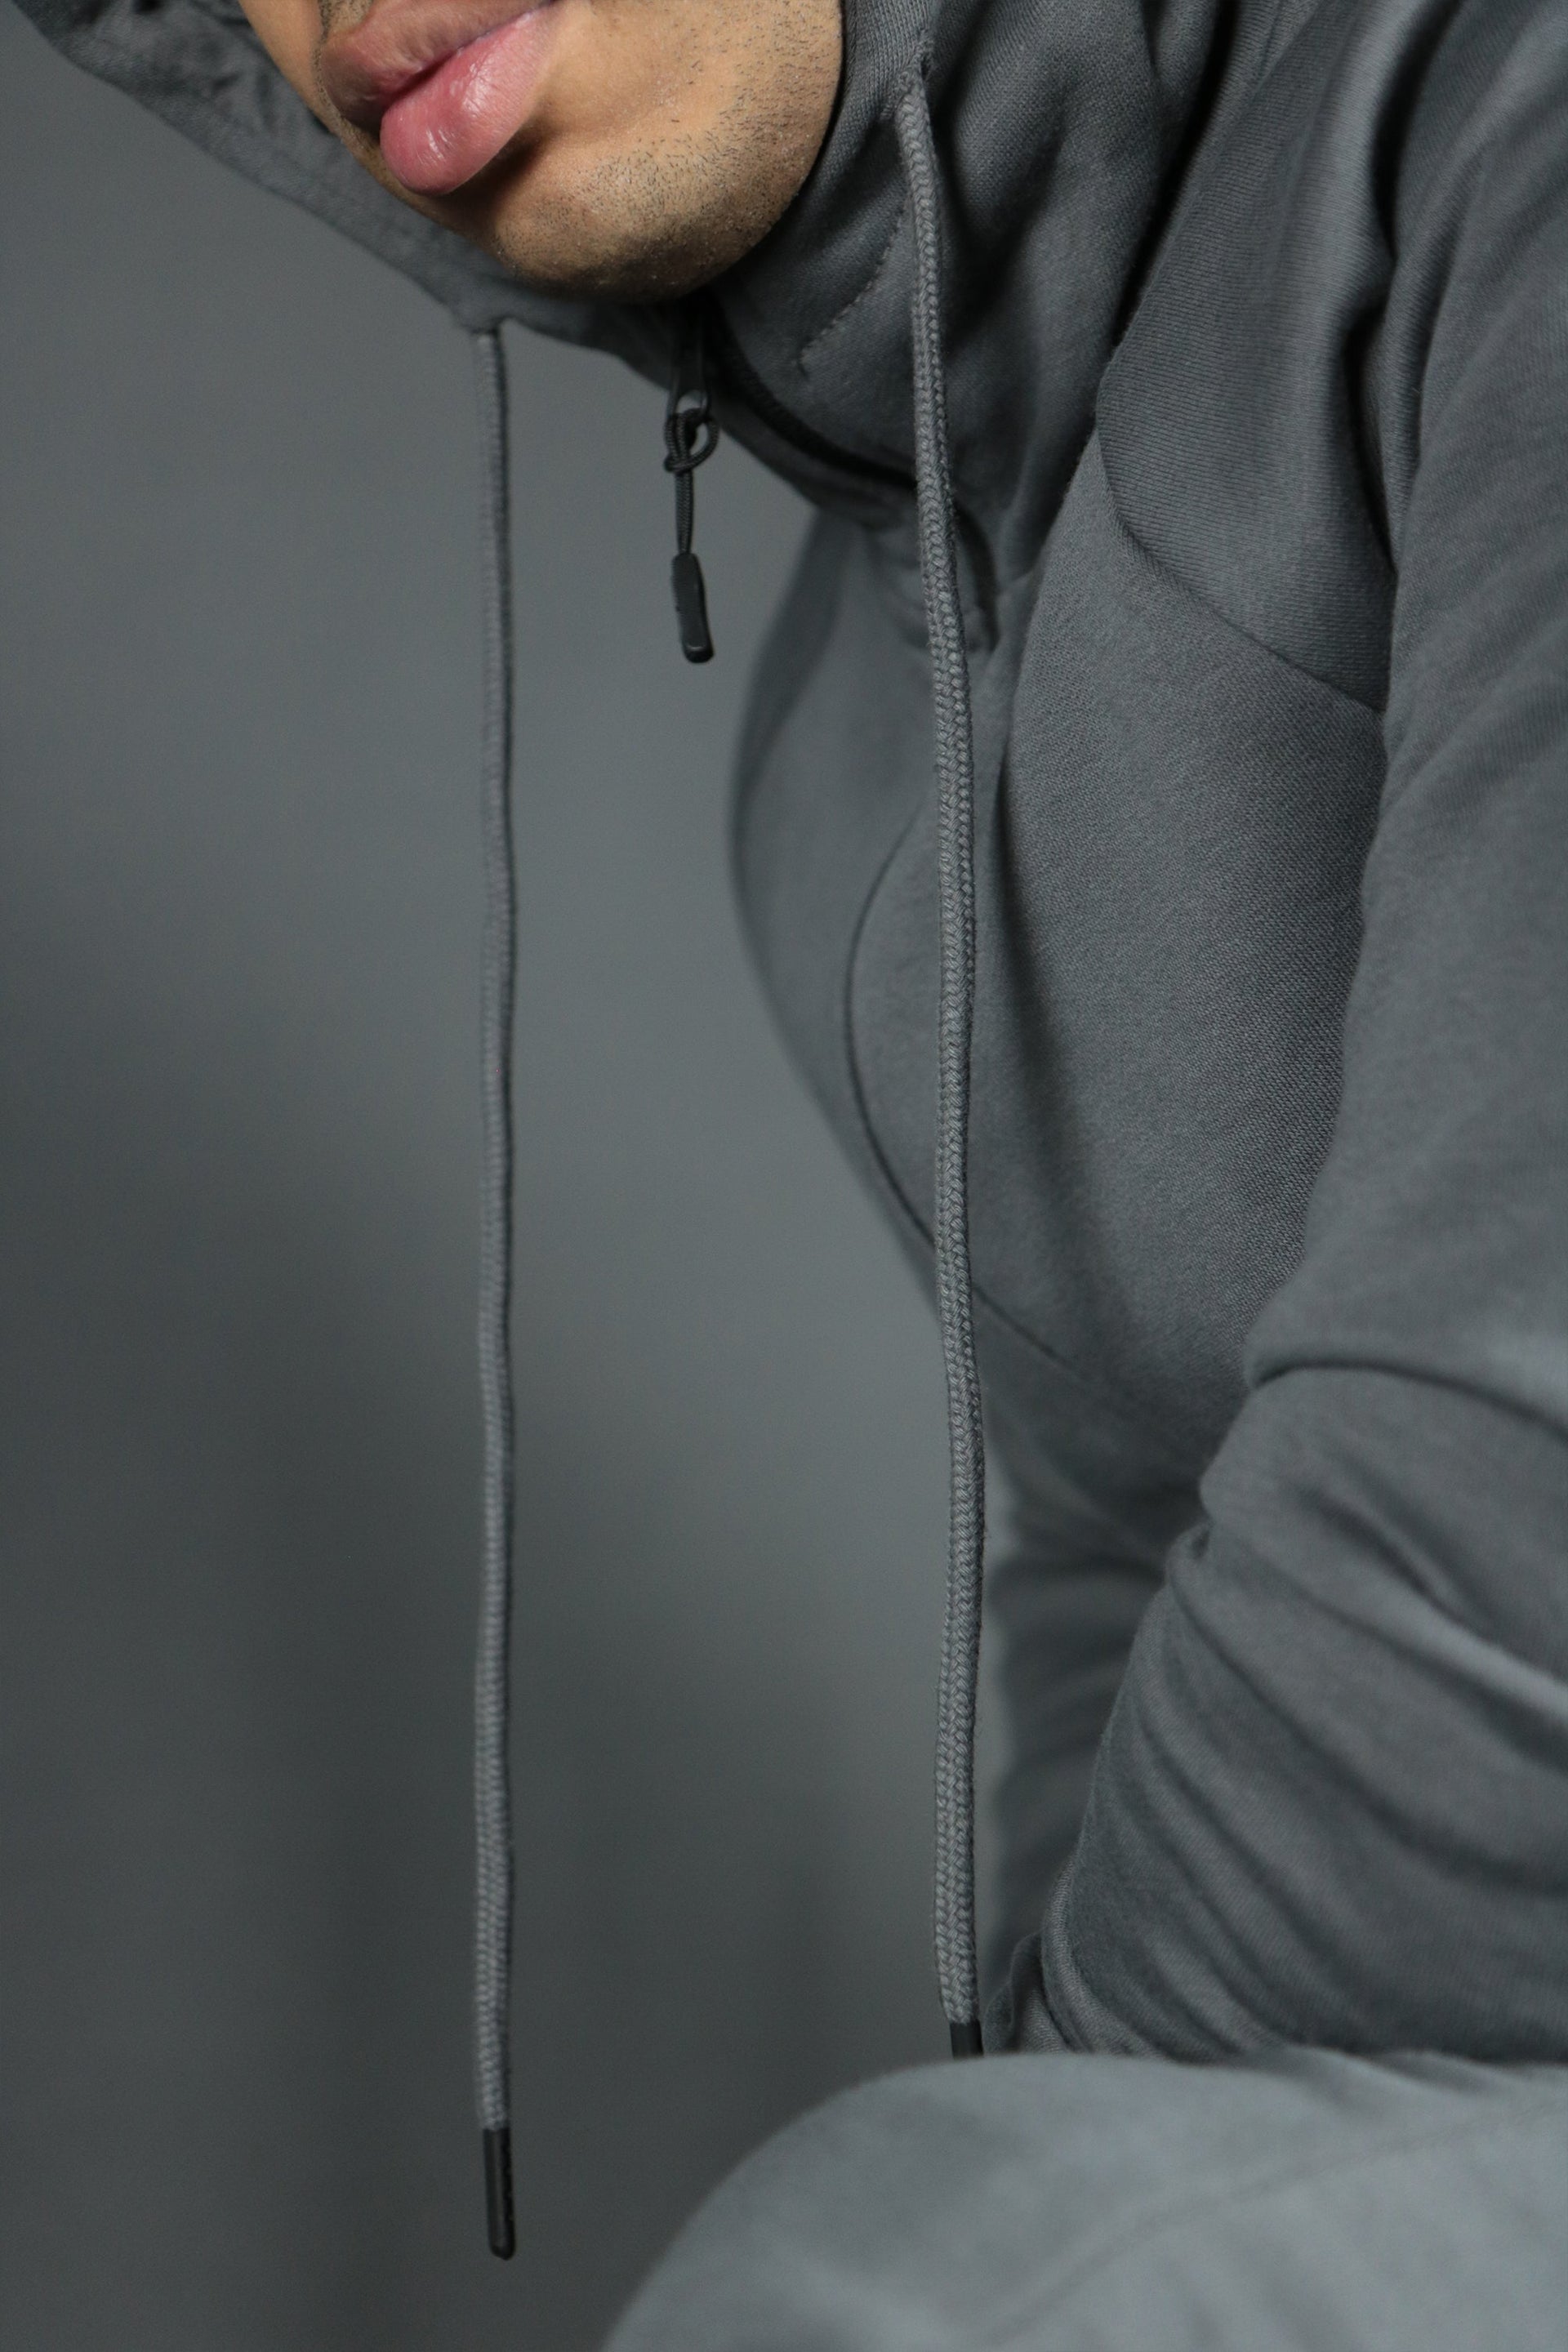 The drawstring adjustment of the charcoal tech fleece basic hoodie by Jordan Craig.